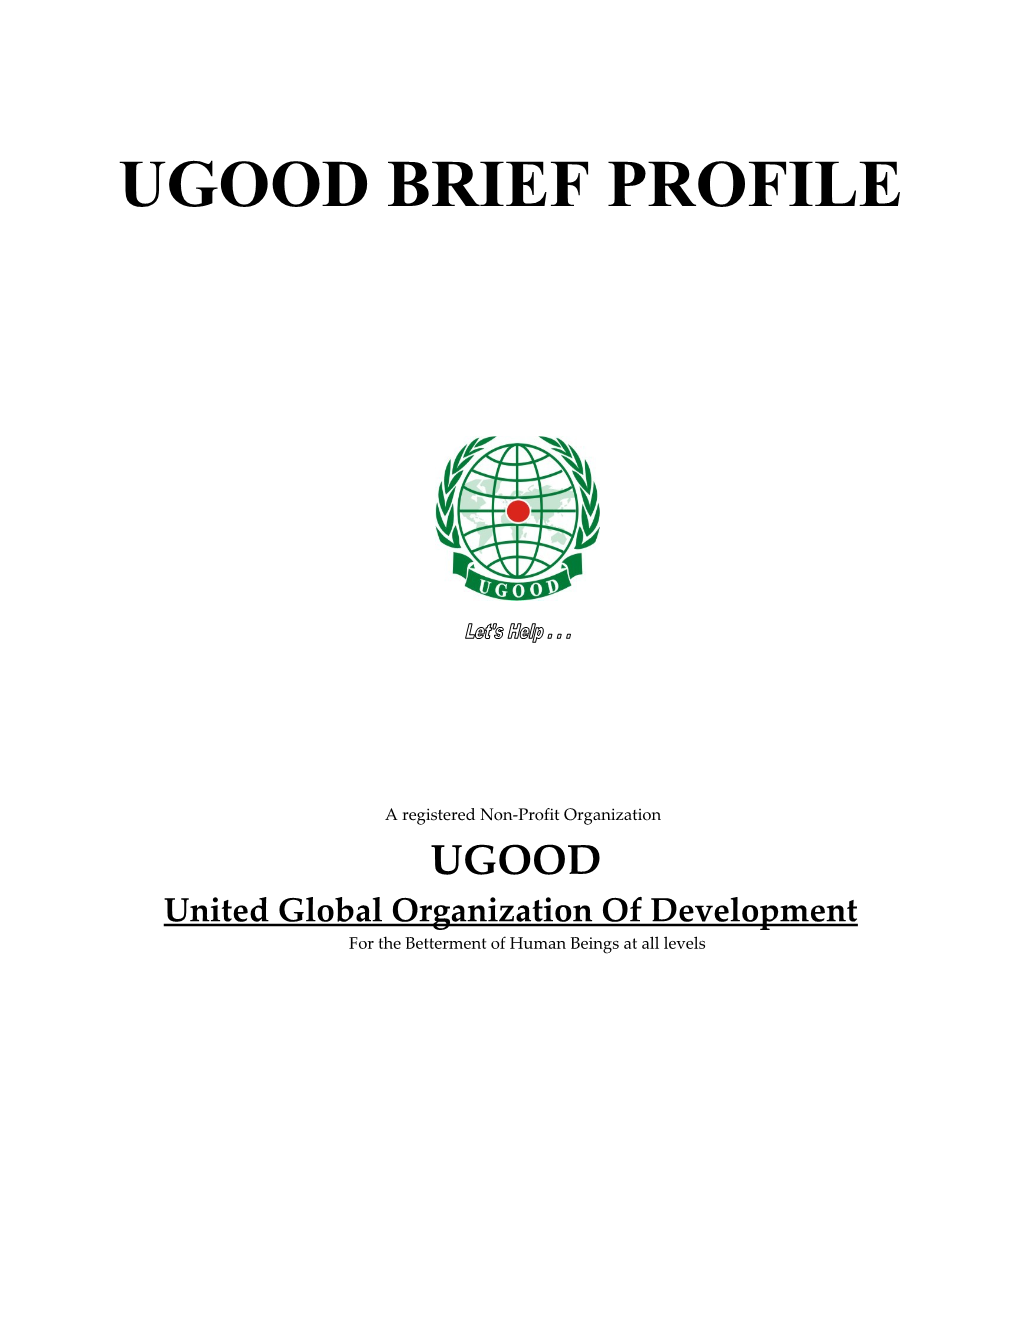 United Global Organization of Development UGOOD